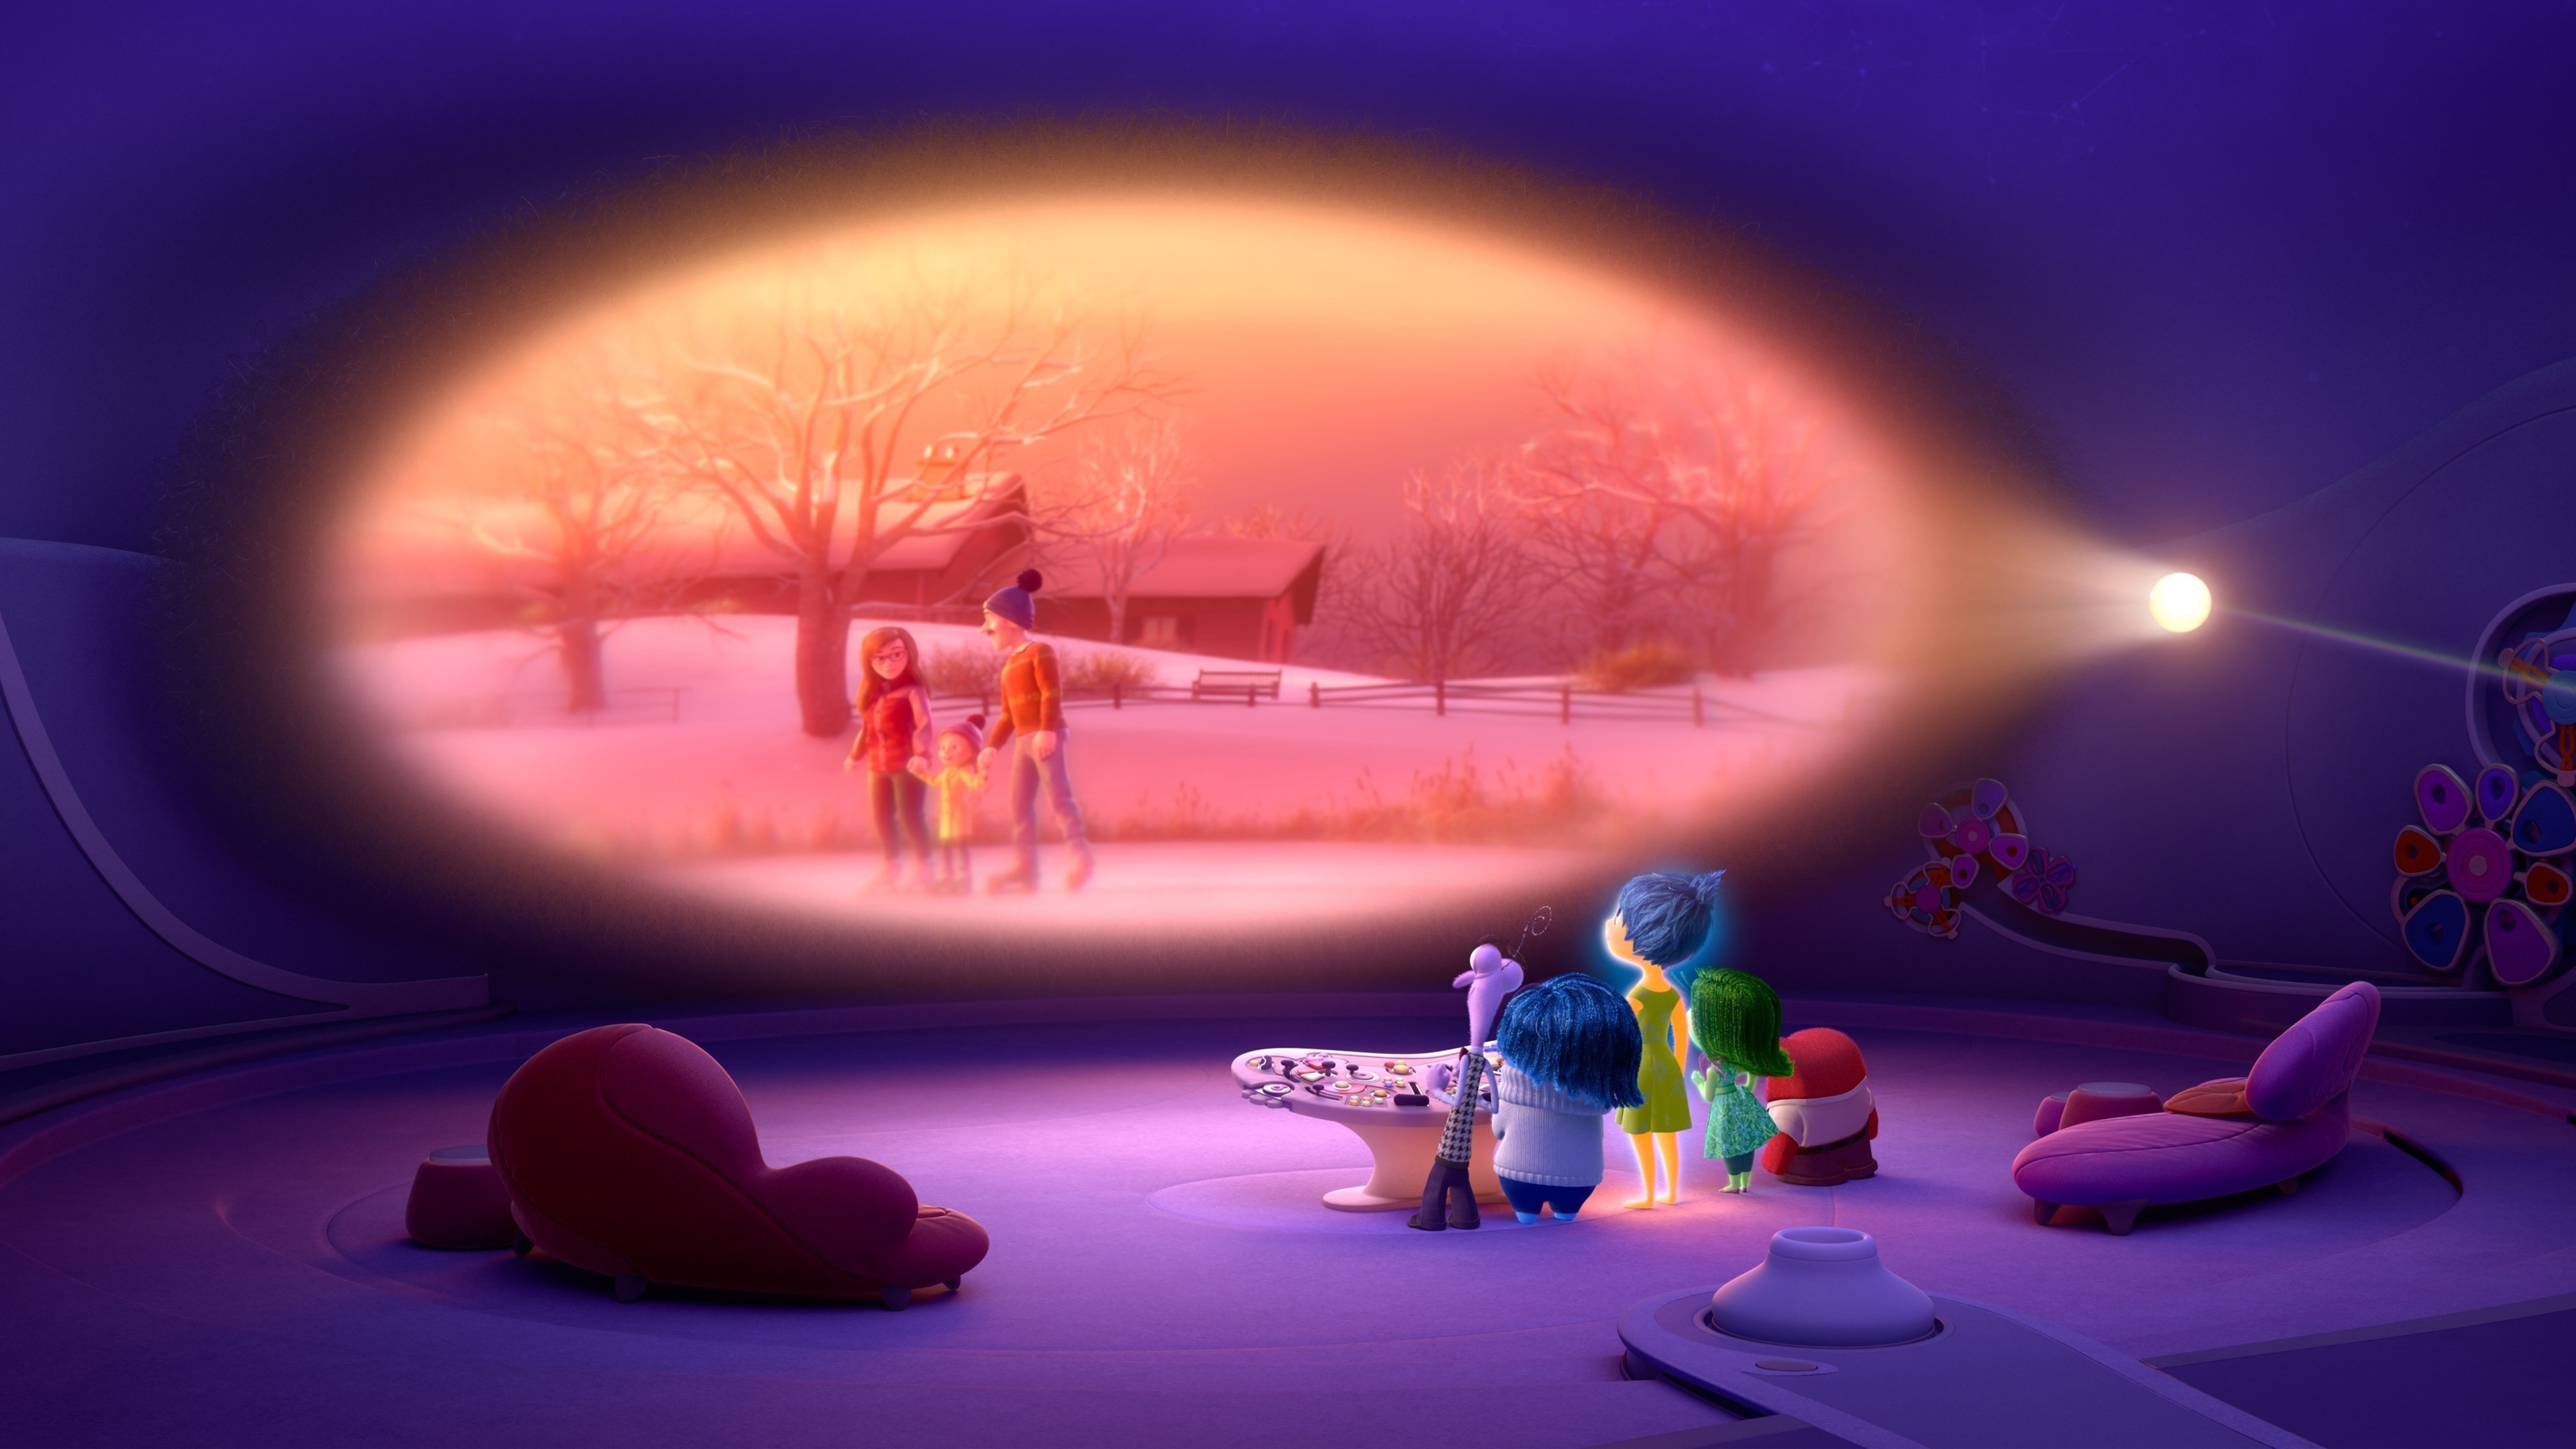 General 3840x2160 Inside Out animation movies 2015 (Year) digital art screen shot Pixar Animation Studios CGI animated movies